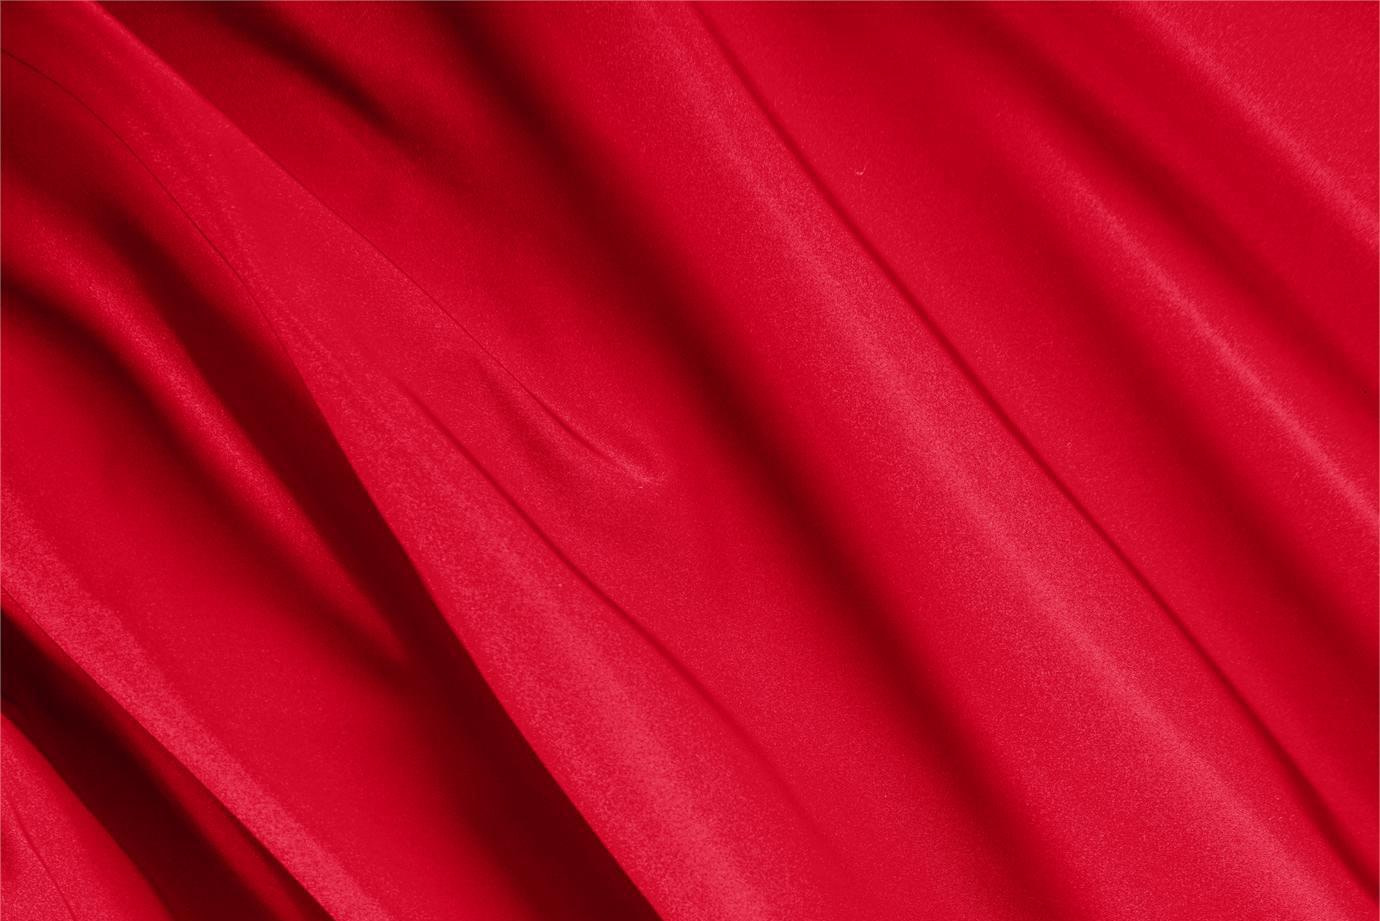 Tissu Couture Radzemire Rouge feu en Soie UN000310